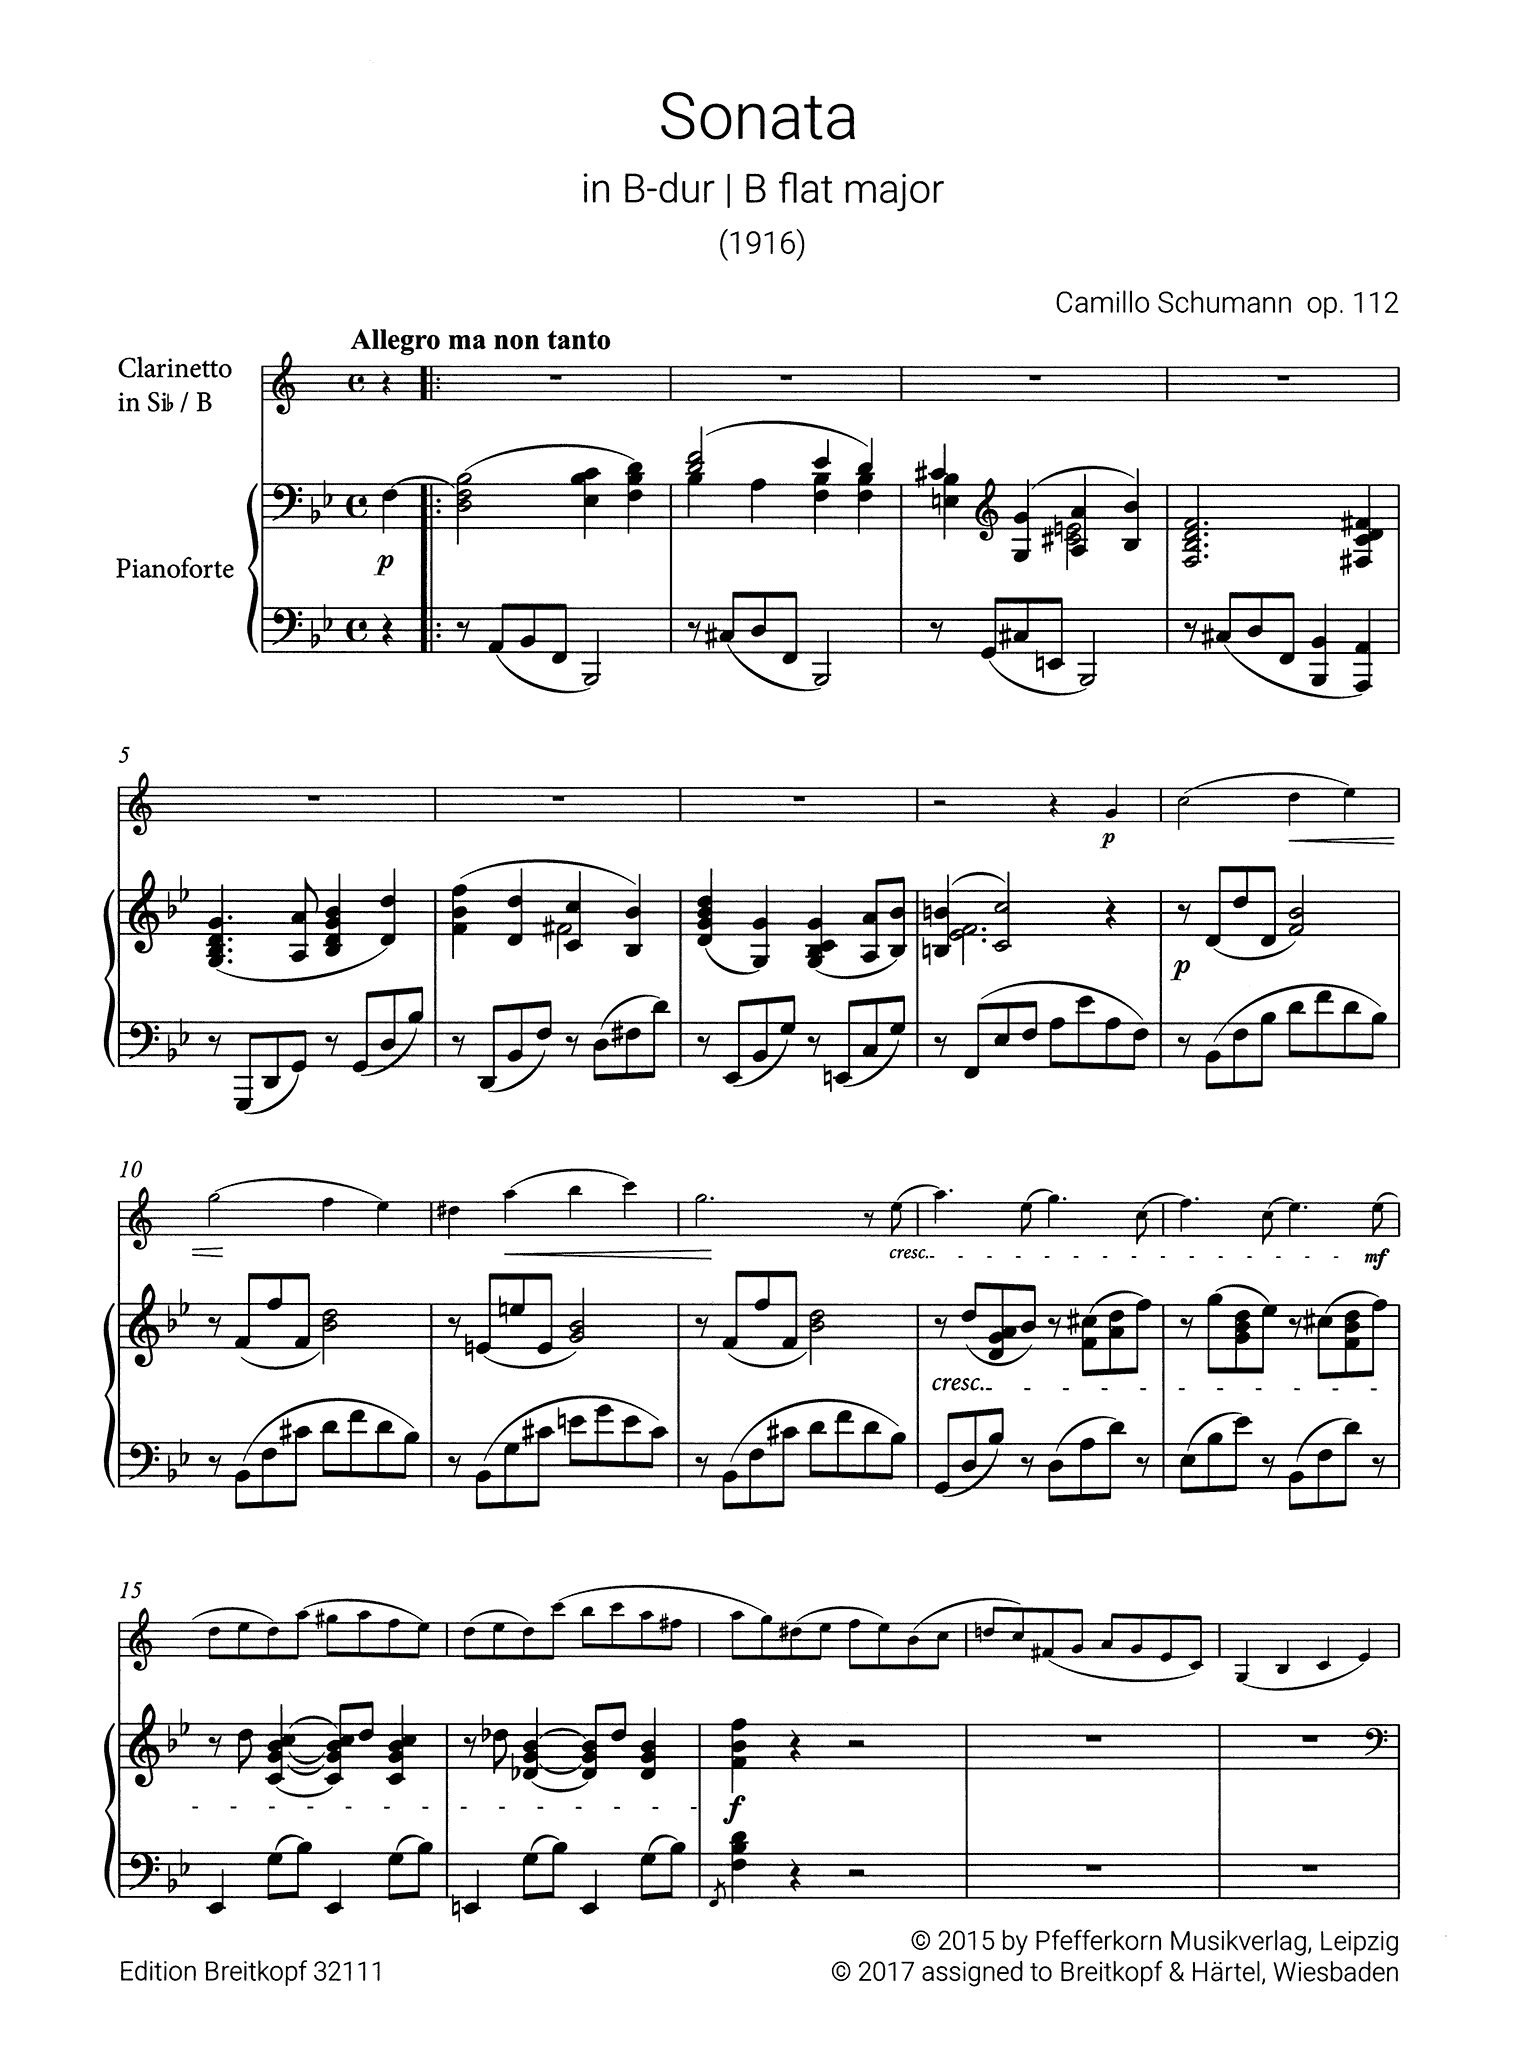 Camillo Schumann Sonata No. 1 in B-flat Major, Op. 112 clarinet & piano - Movement 1